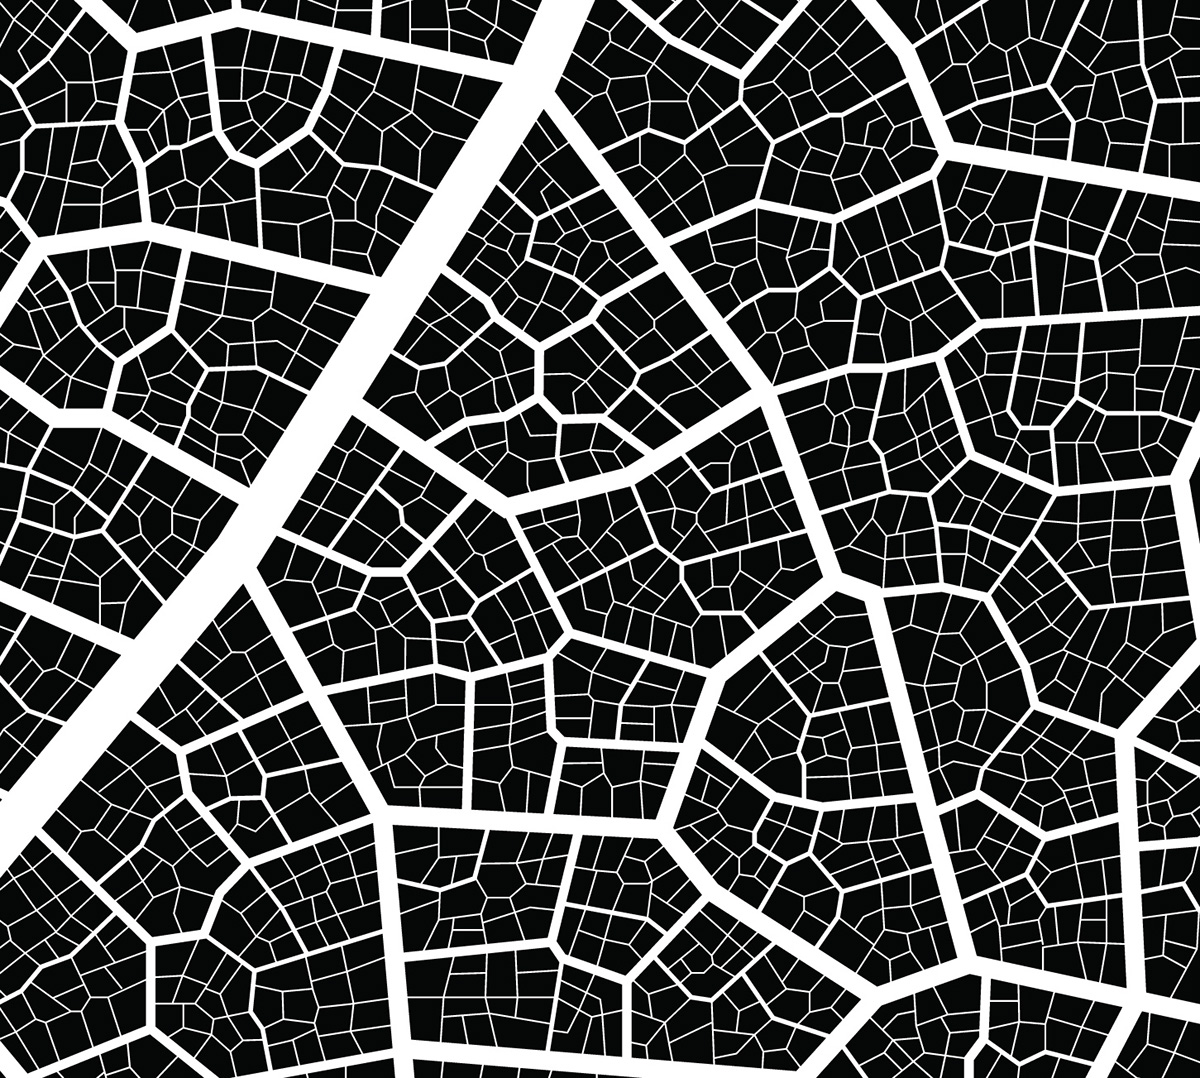 marton jancso Urban tissue experiment organic fractal system city structure leaf fig veins nutrient supply district Layout minimal pattern simple vector art 3D MAX Landscape Park graphic new fresh